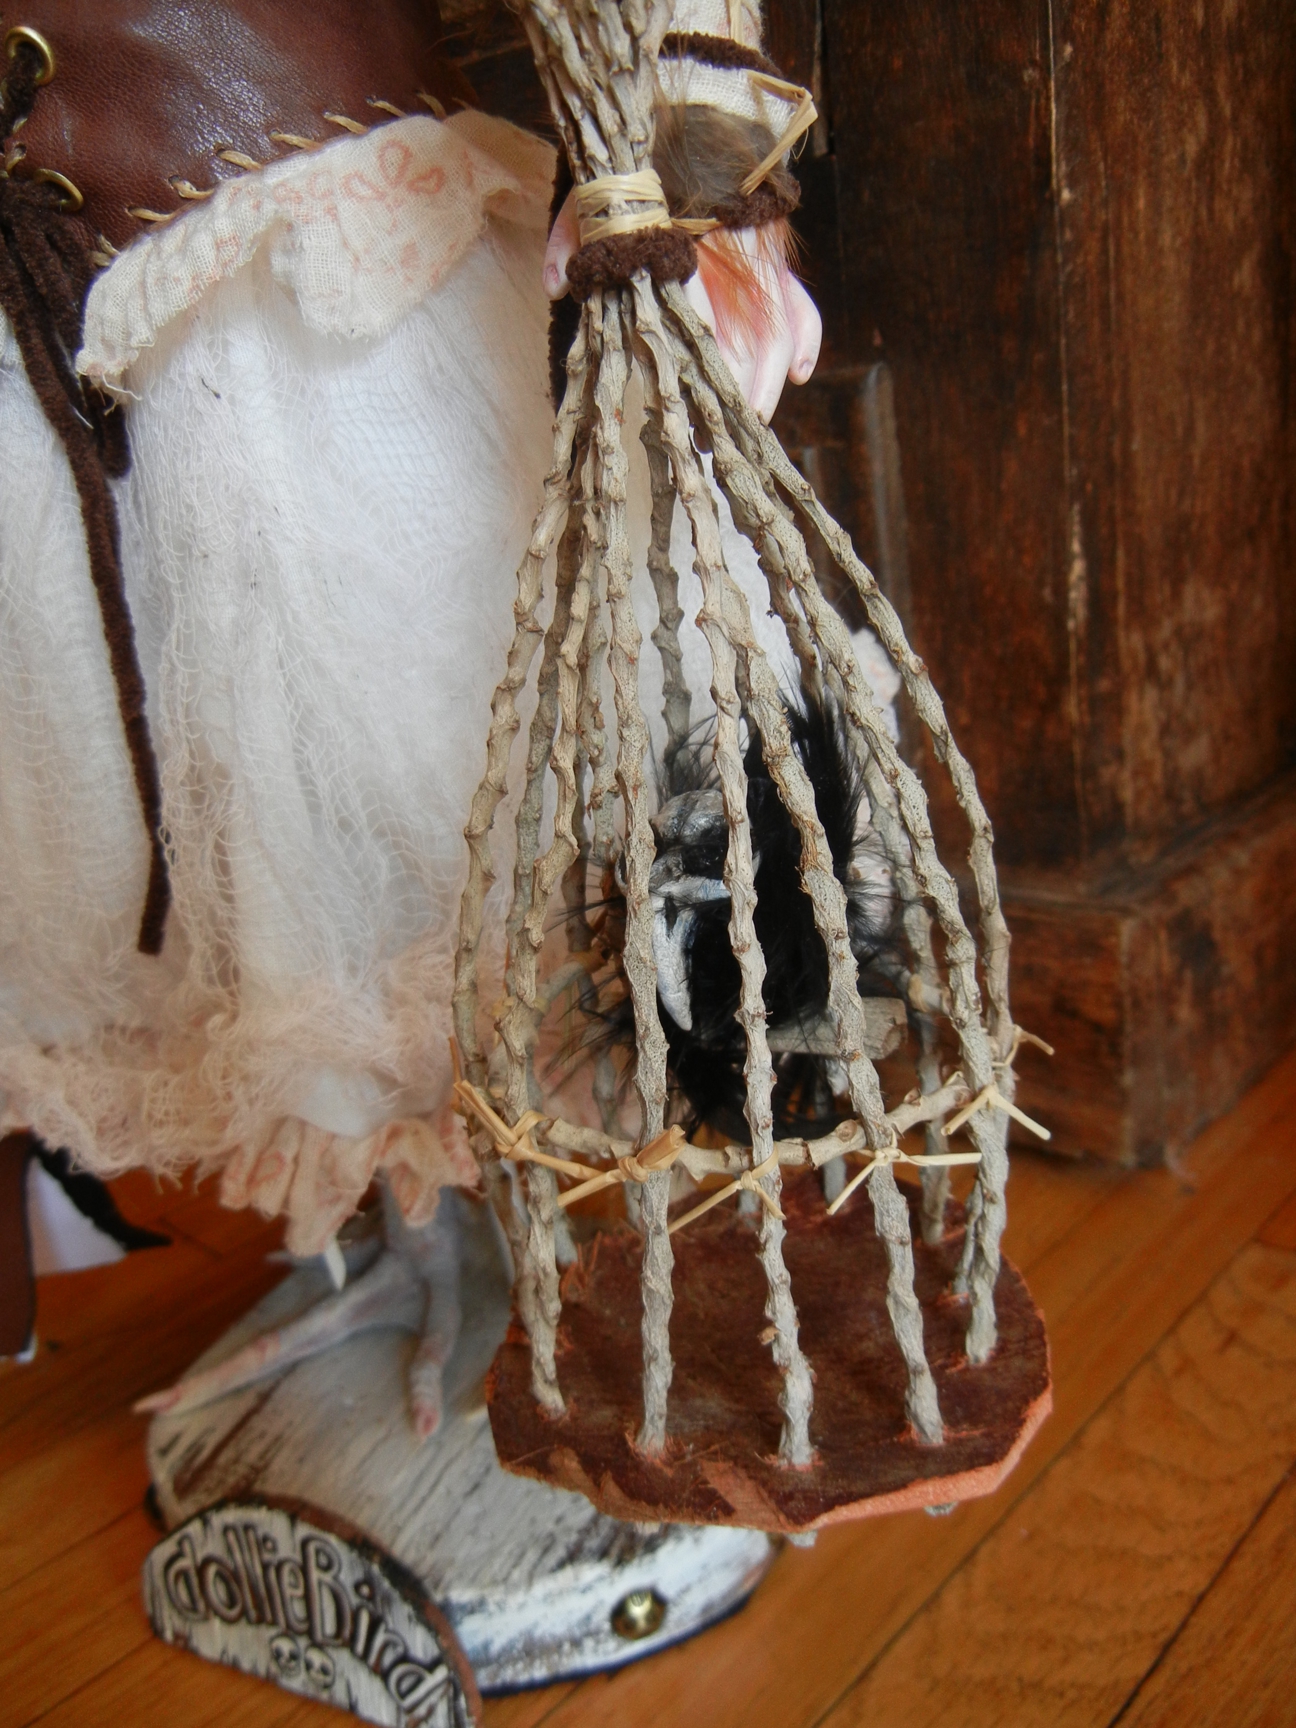 handmade bird cage of sticks with gothic bird inside